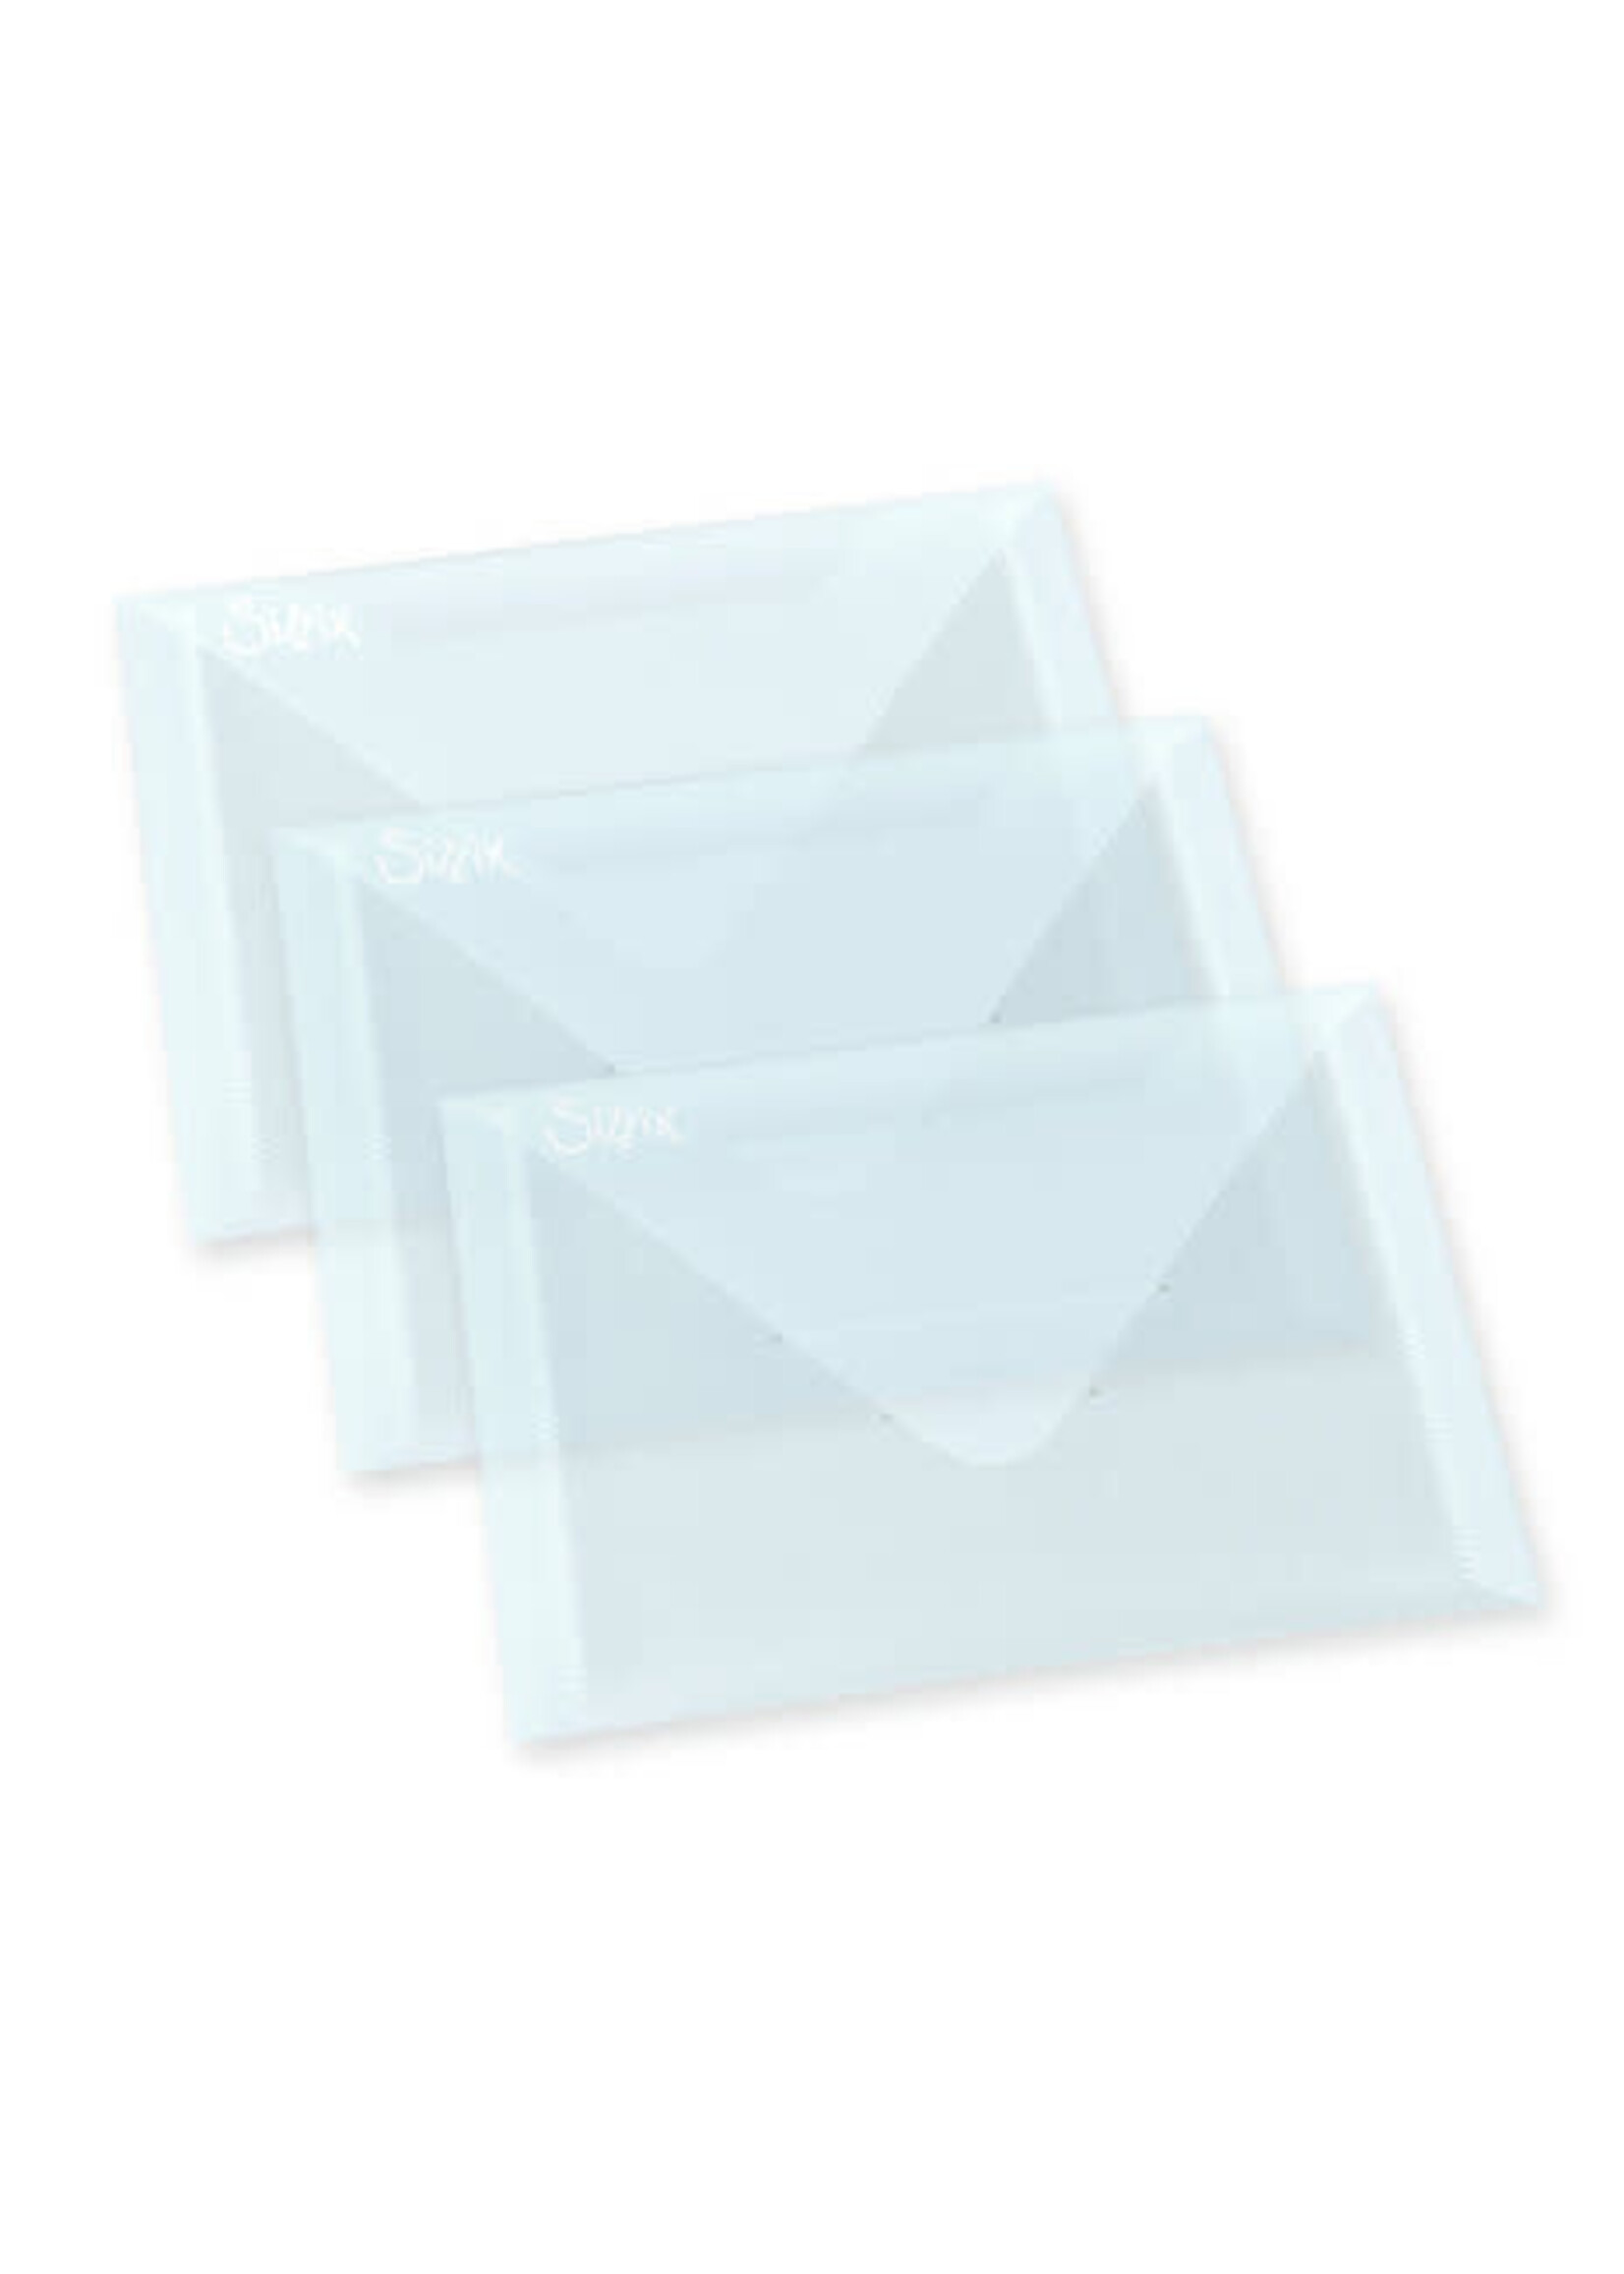 Sizzix Storage Envelopes 5x6 7/8 Inch (3pcs) (654452) 17.5cm x 12.7cm